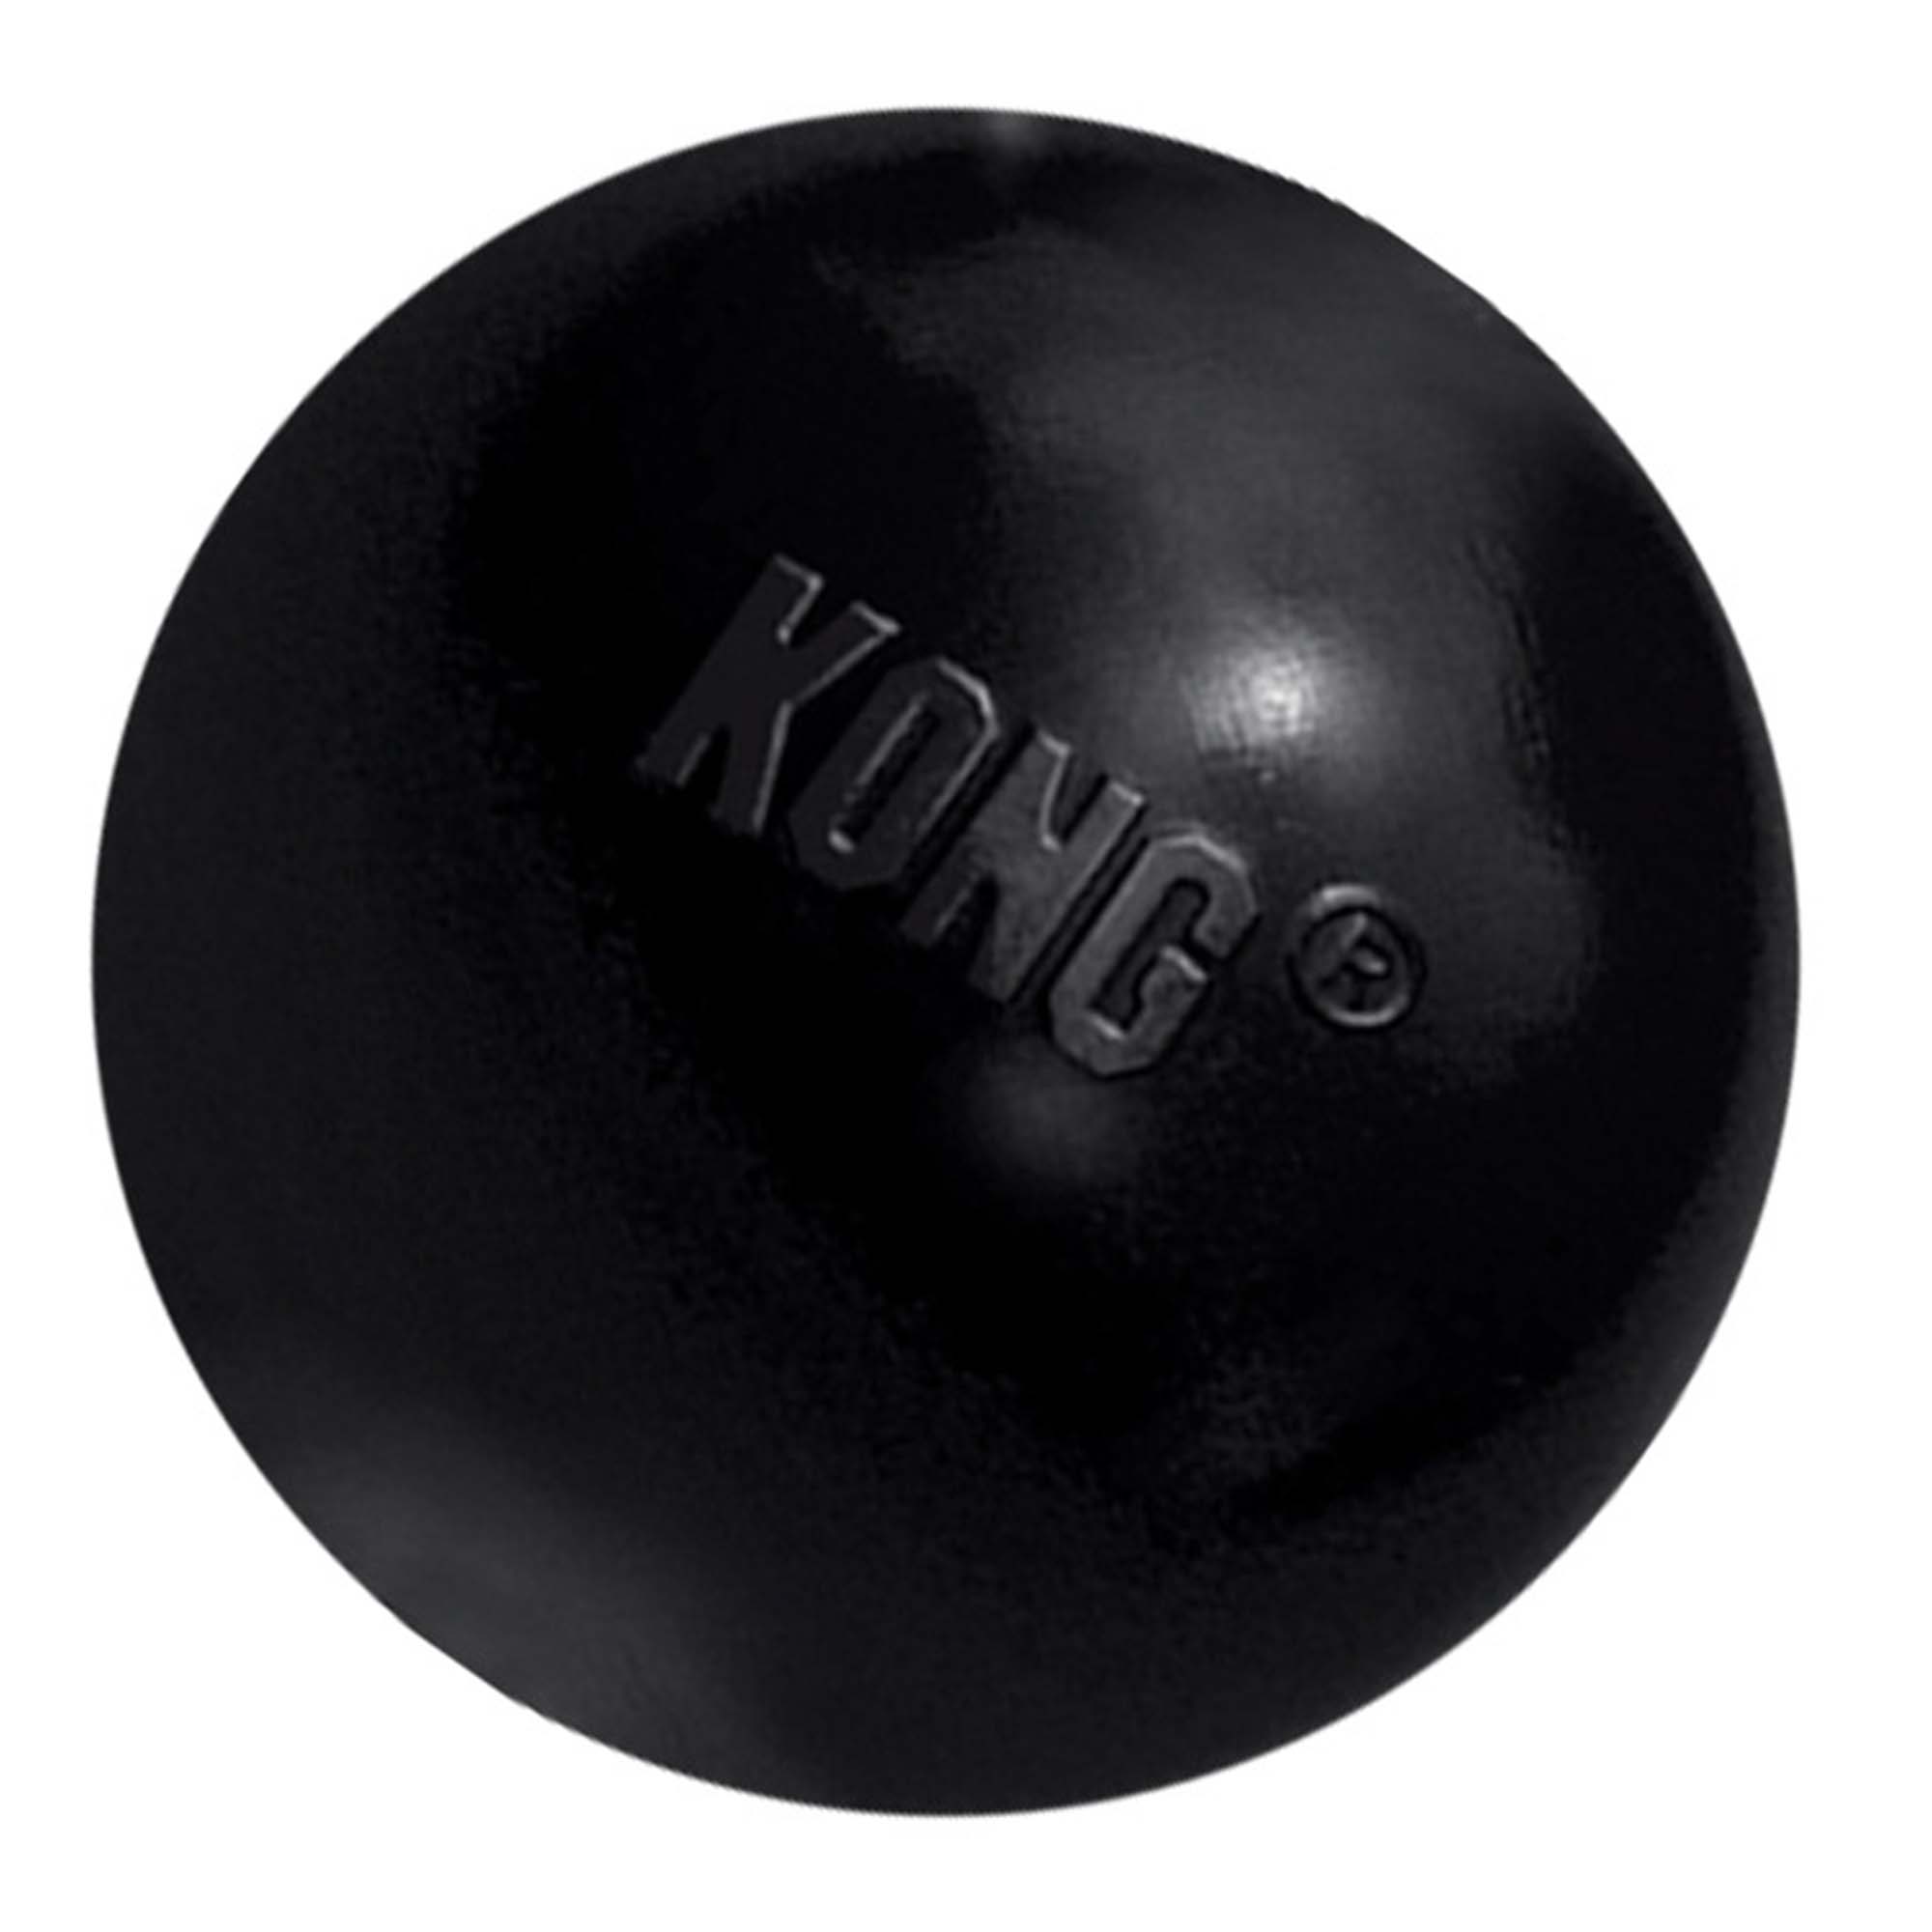 KONG Extreme Ball Dog Toy, Large | Petco